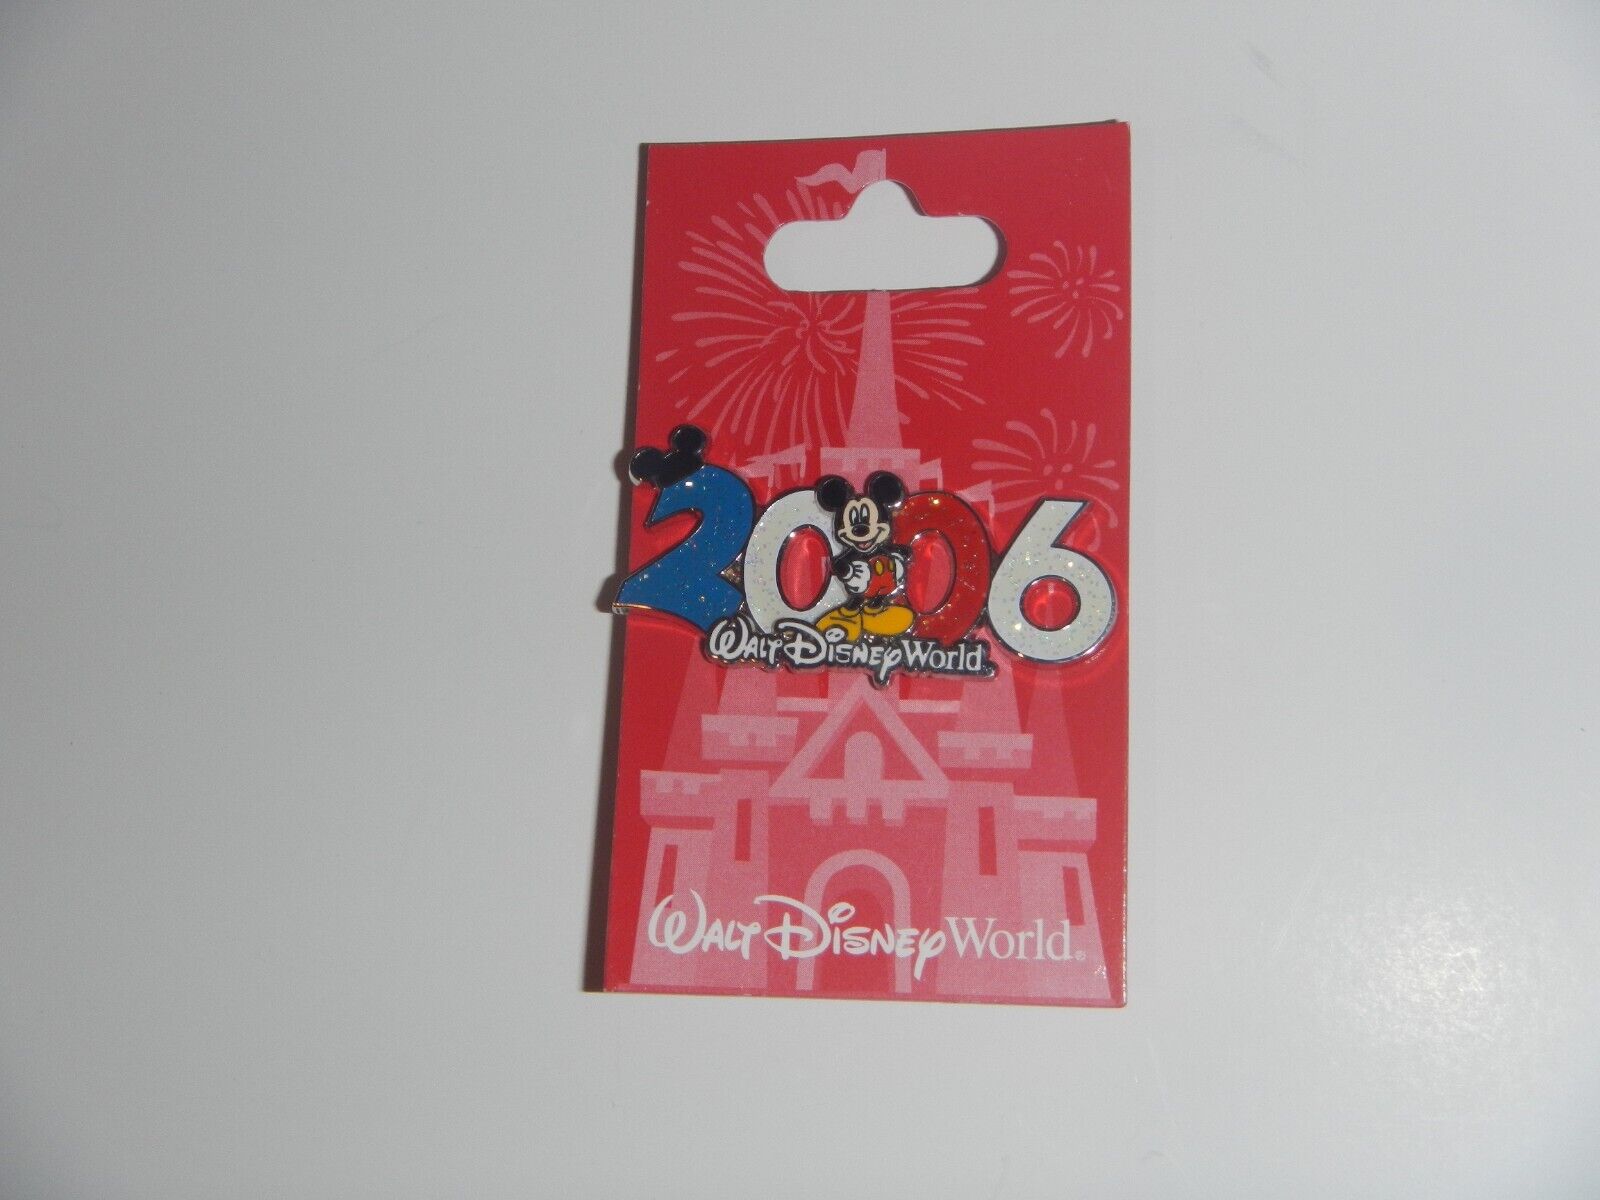 Walt Disney World 2006 Pin.